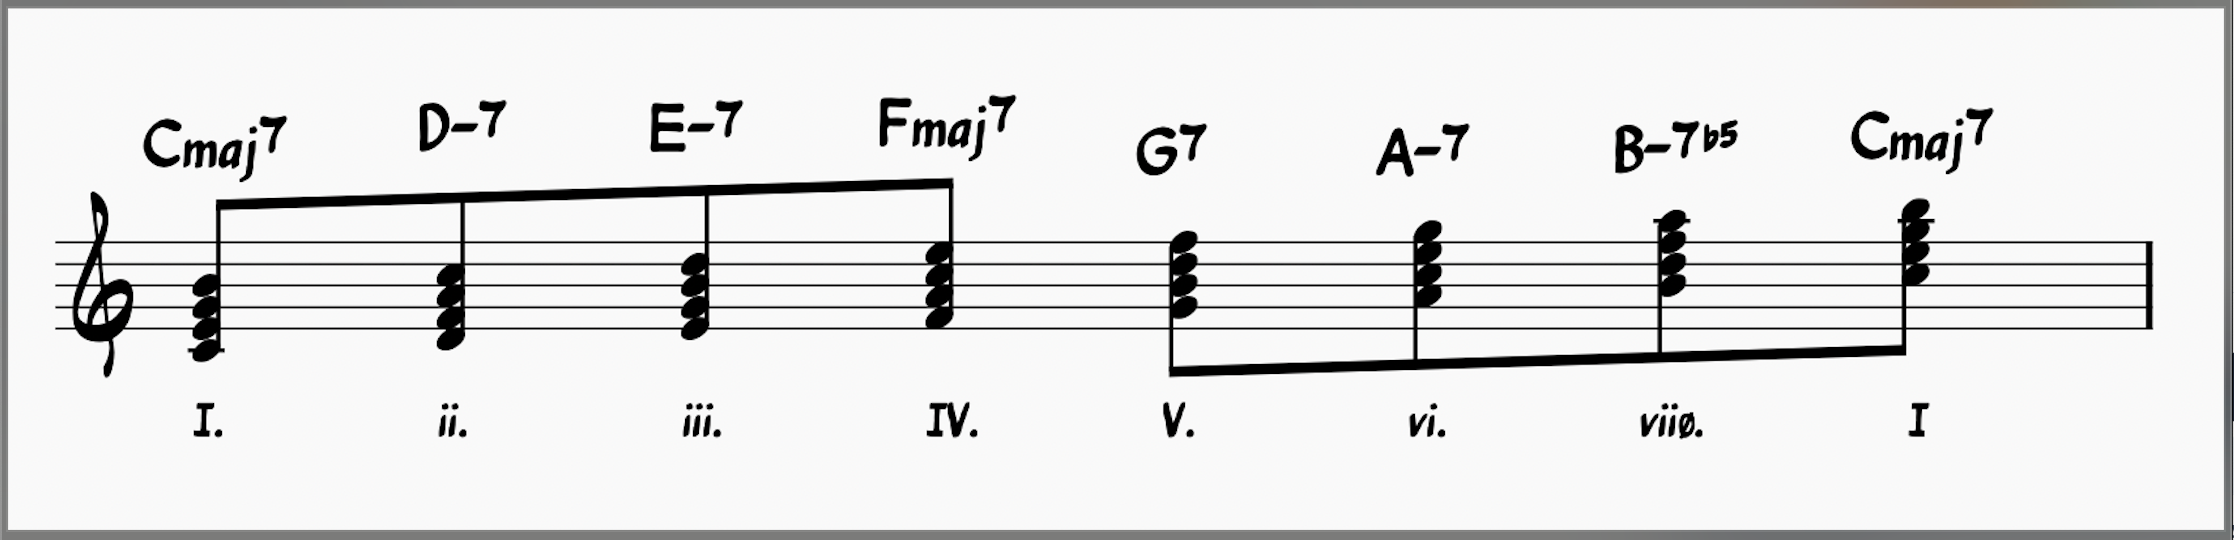 Diatonic seveth chords in the key of C